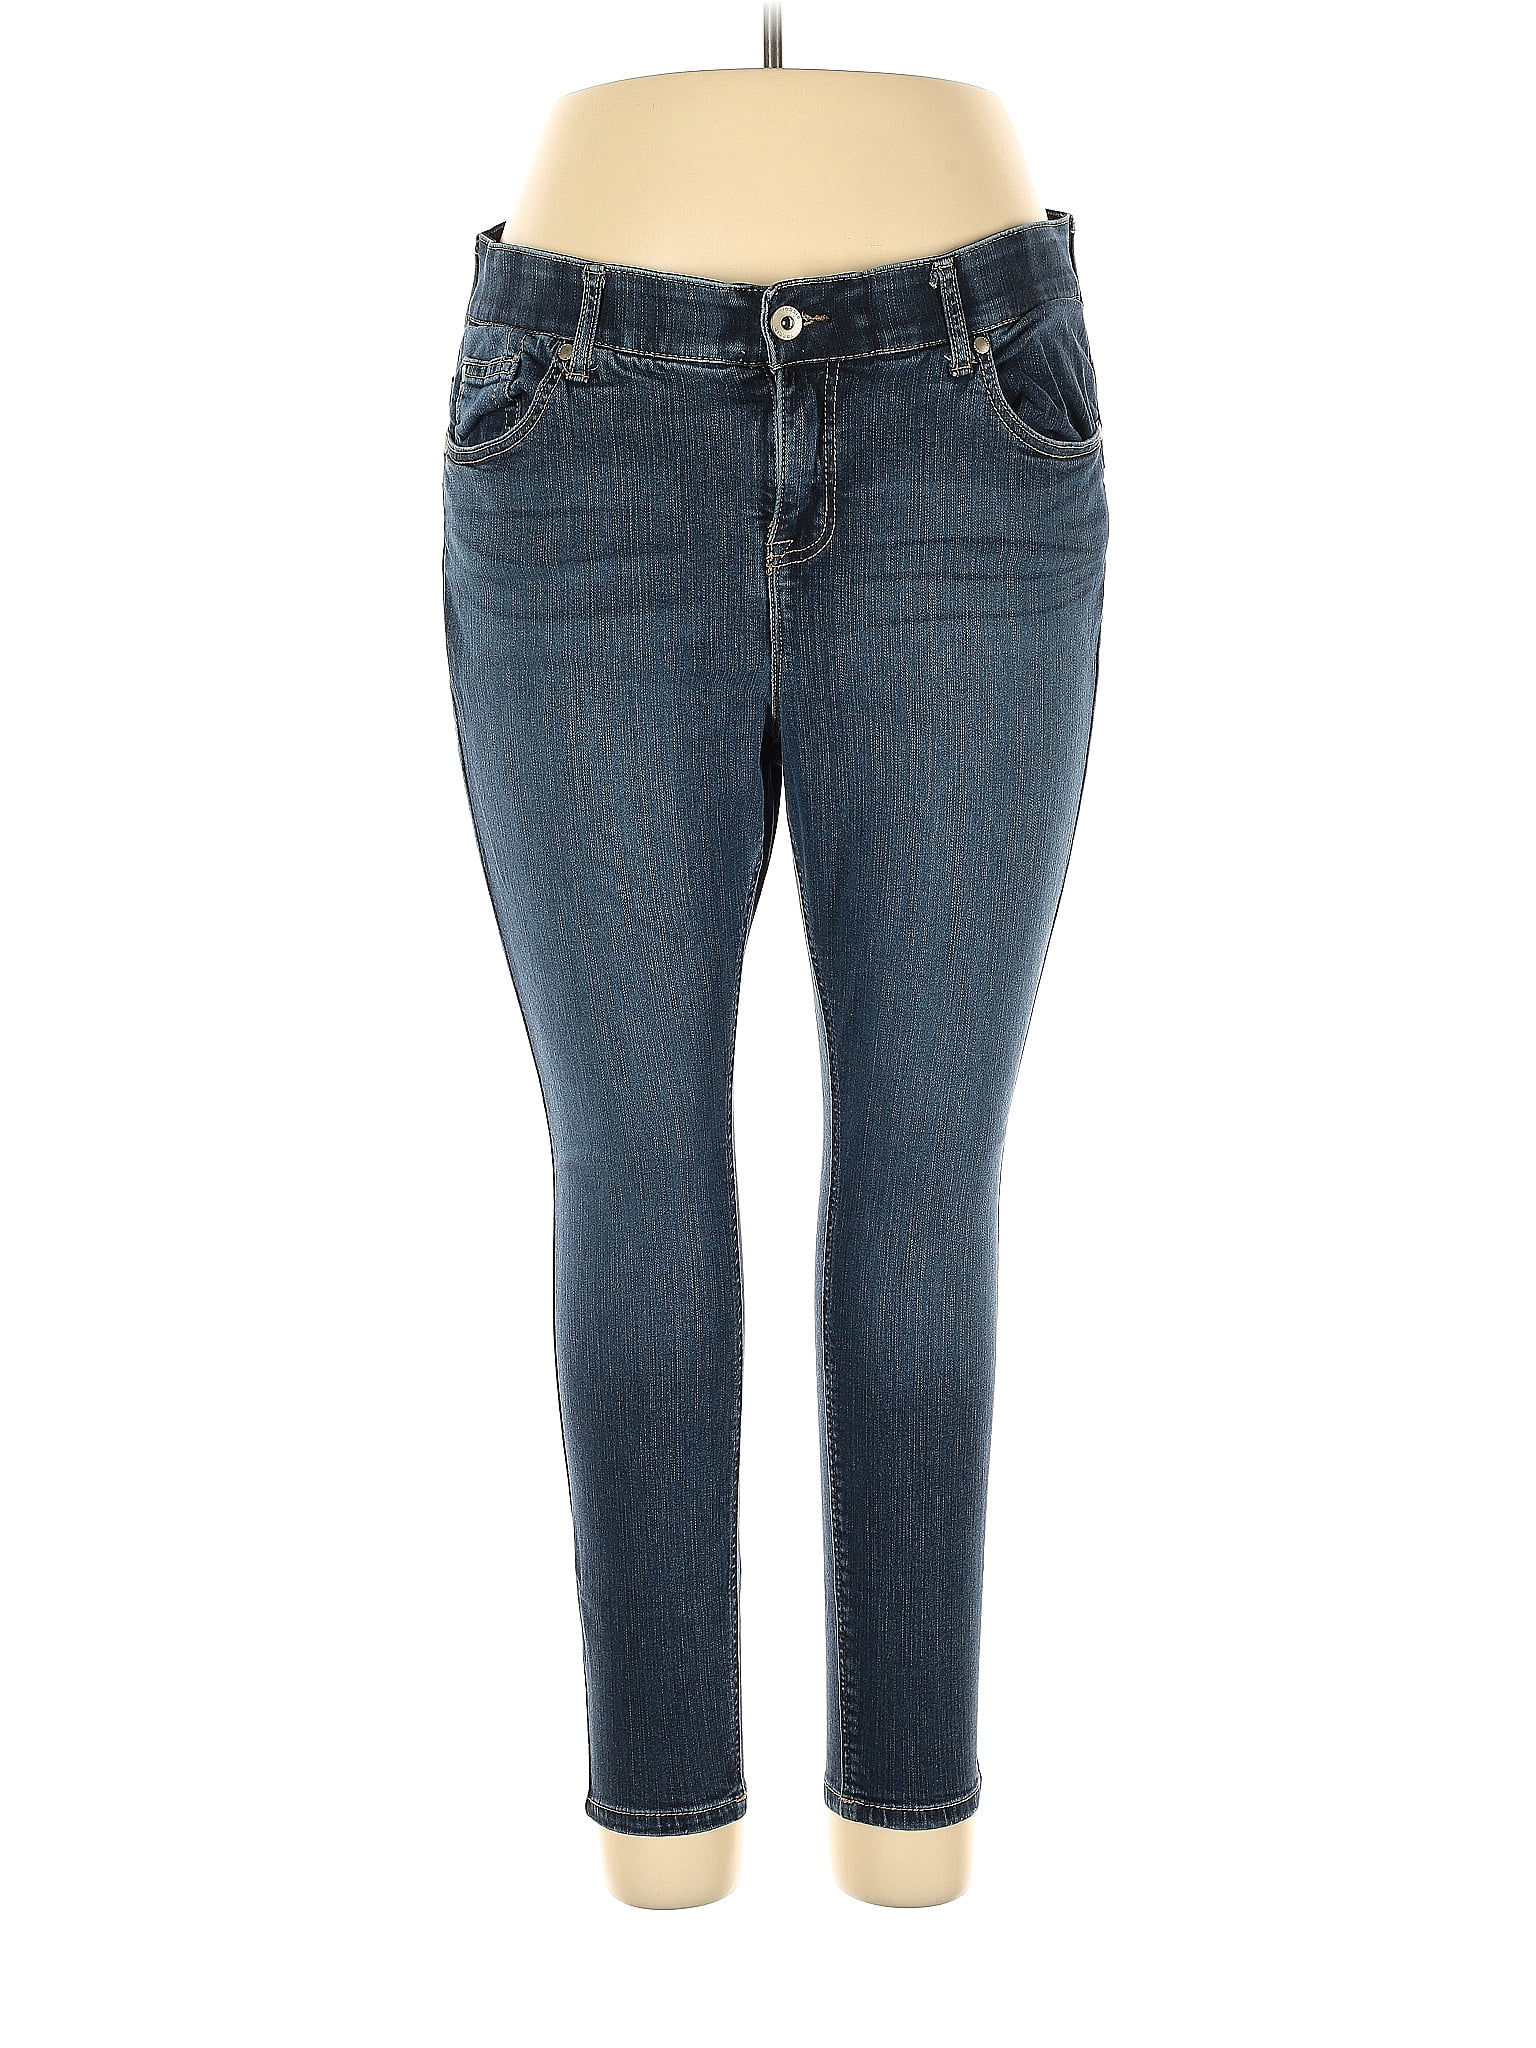 torrid, Jeans, Torrid Blush Colored Jeggings Size 8s